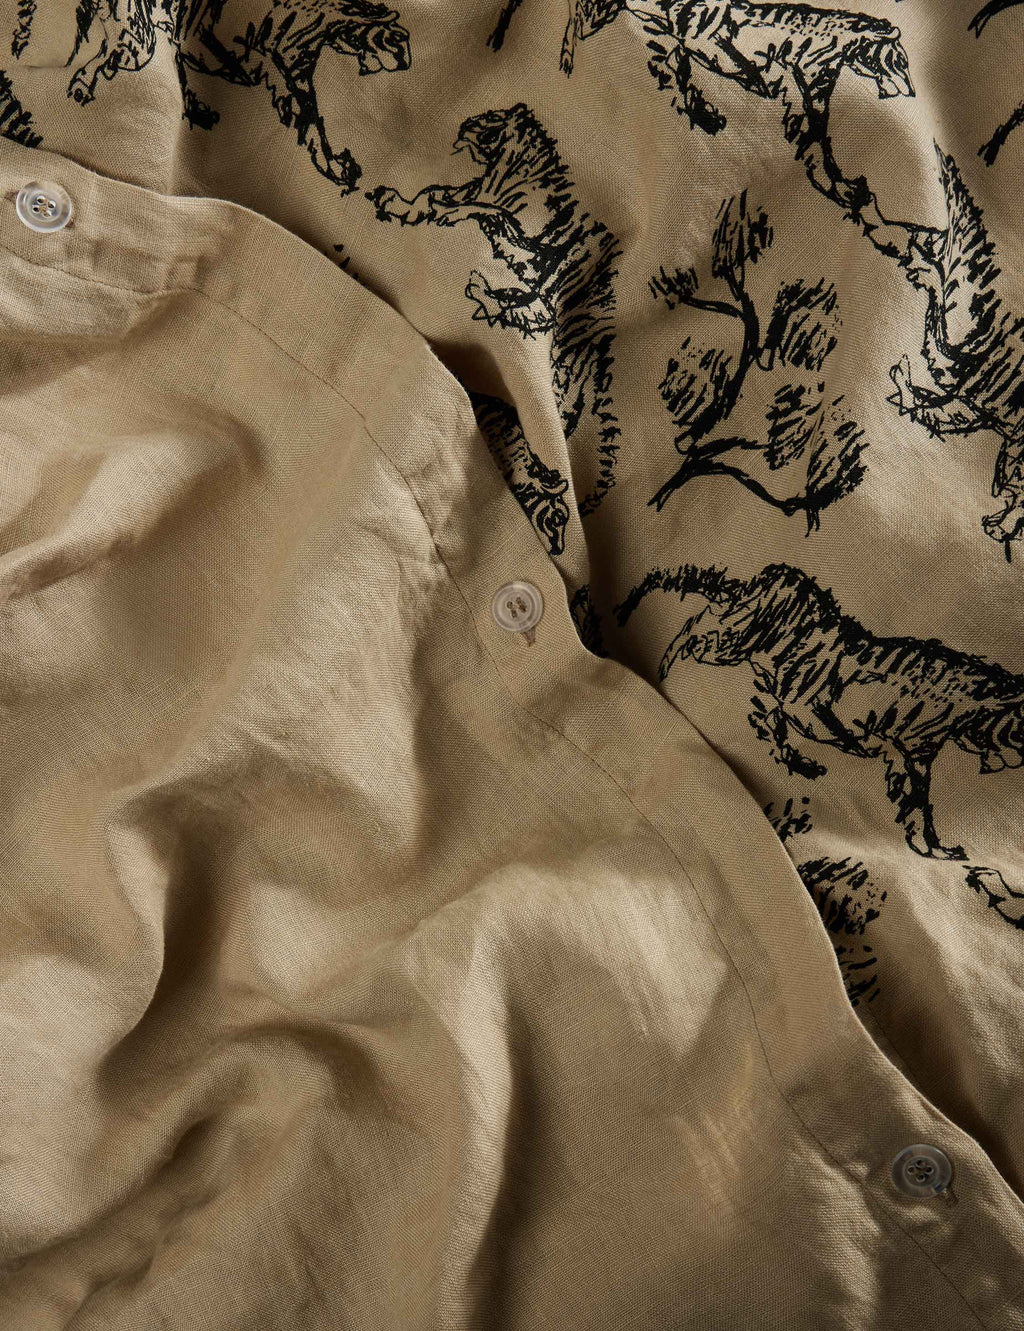 Tigger Full Louis Vuitton Bedding Sets Luxury Brand Duvet Cover